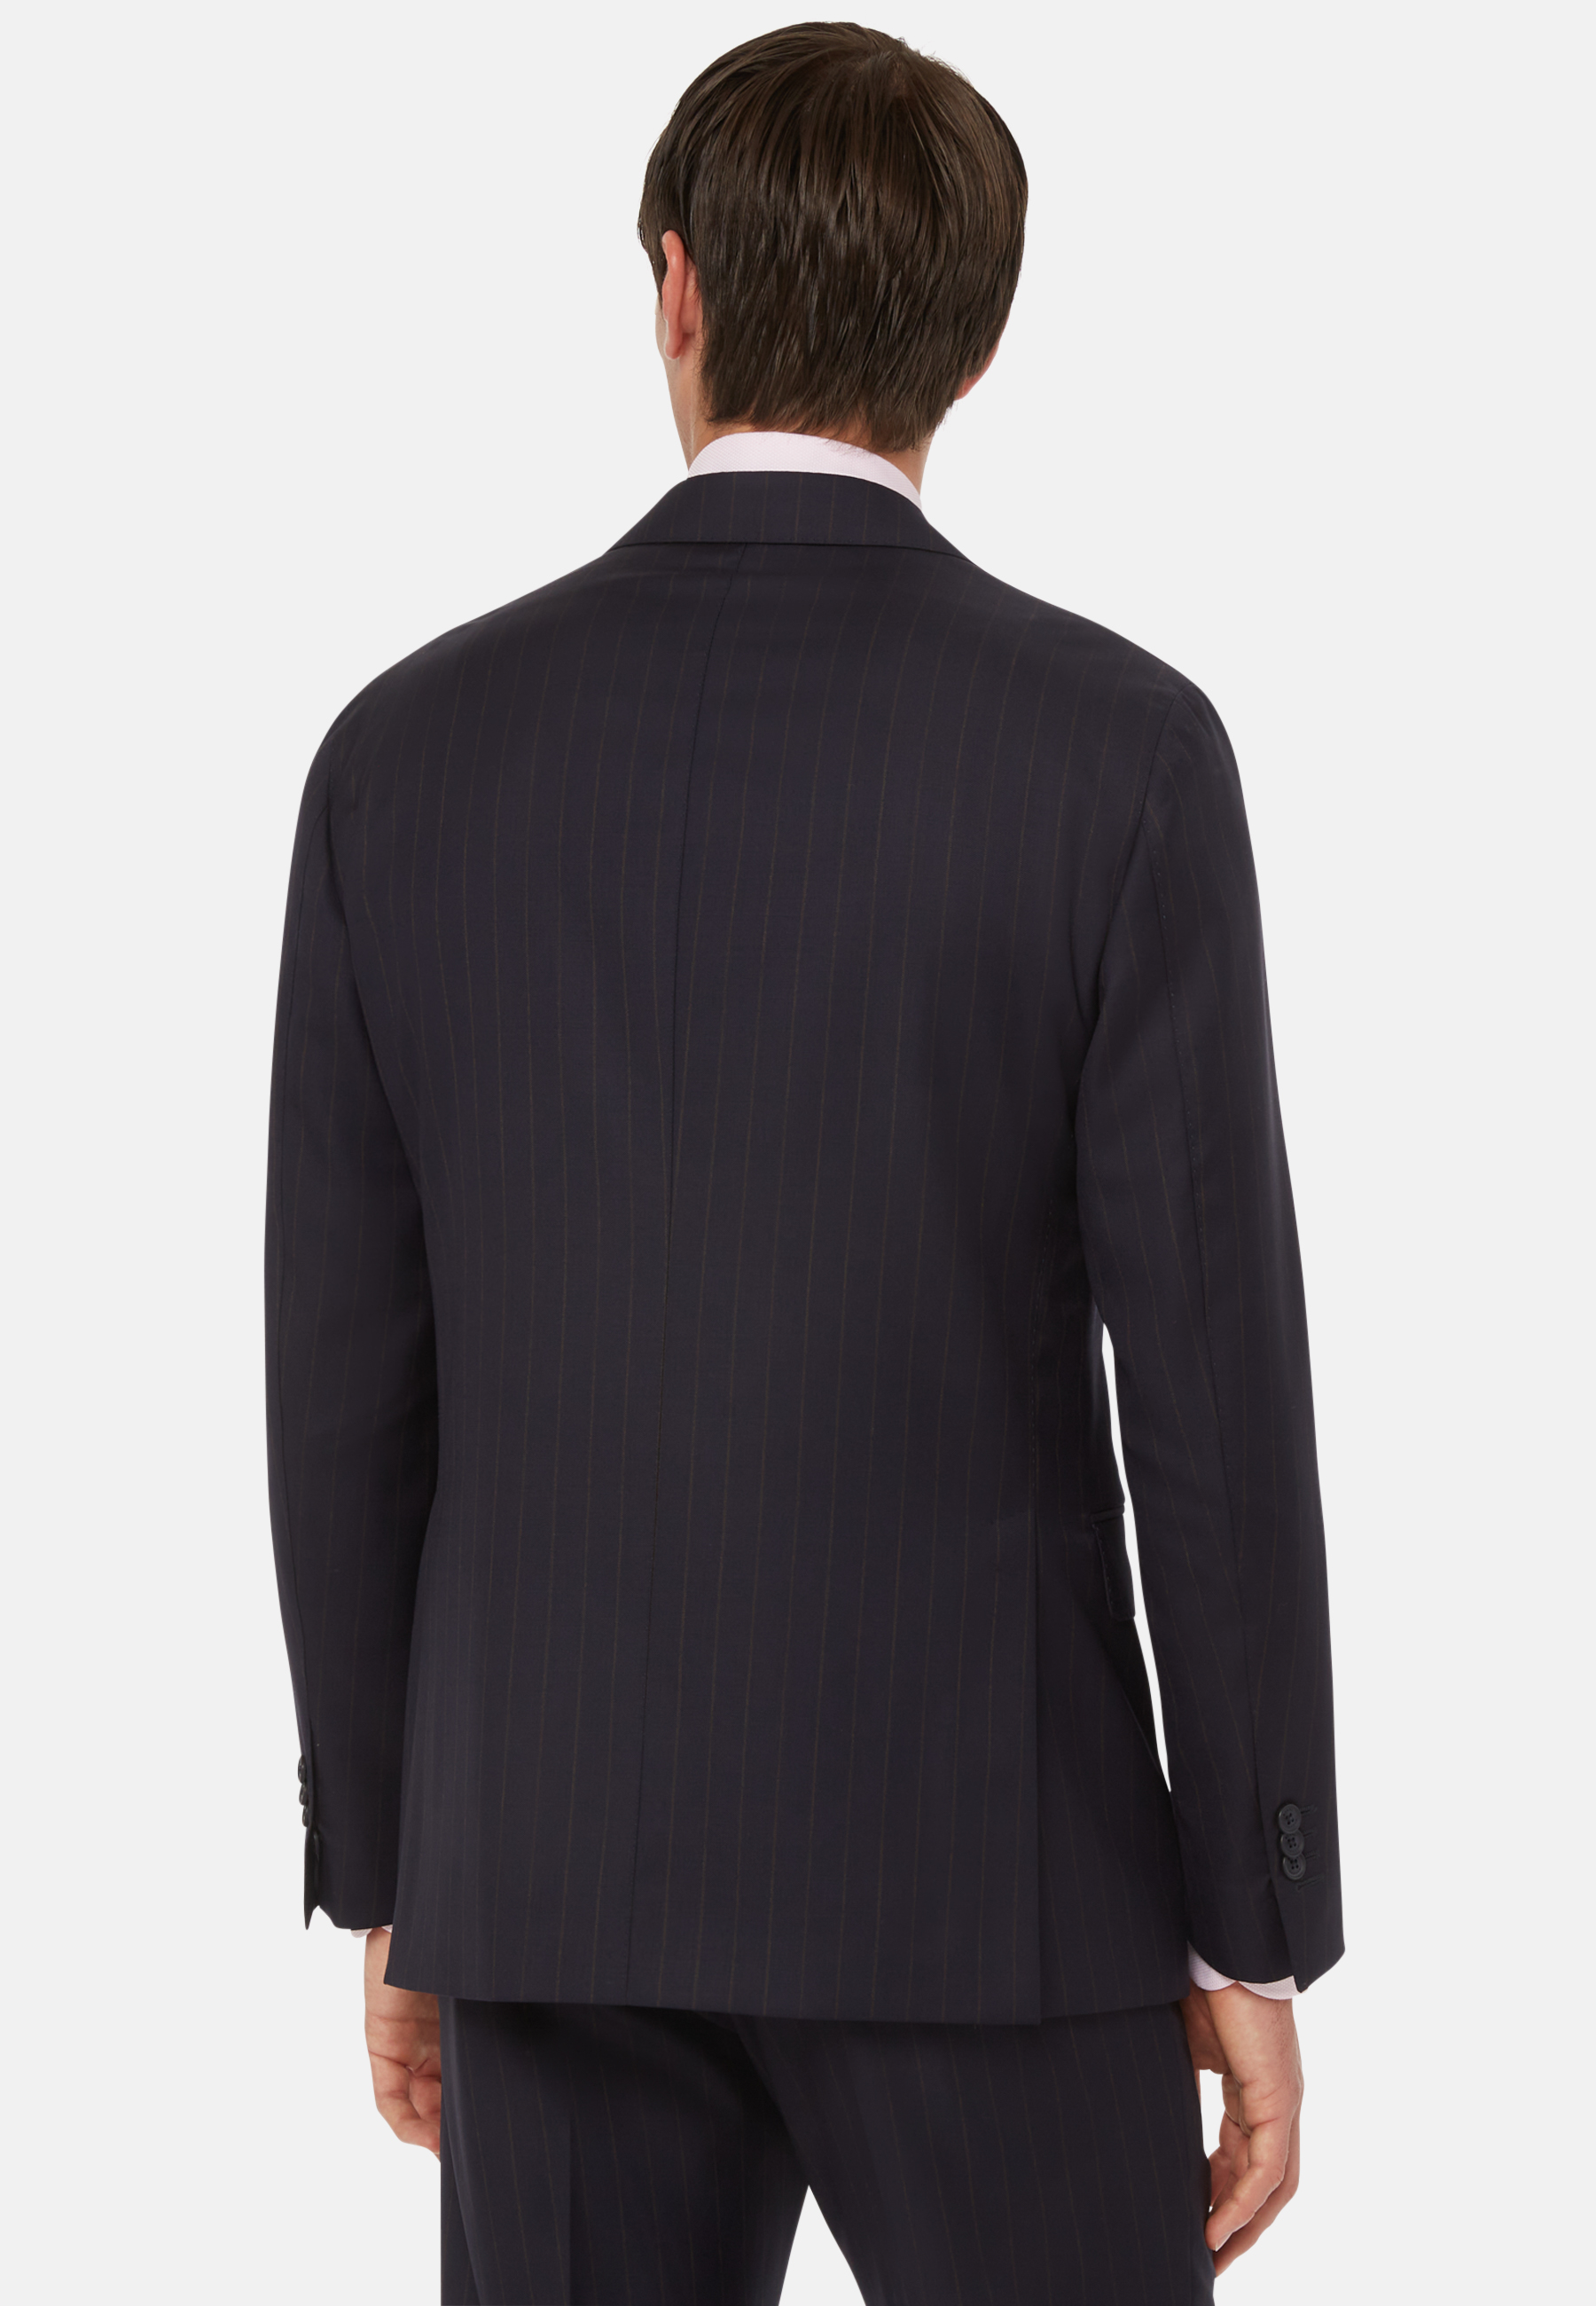 Bojo Pivas Navy Blue Slim Fit Pinstripe Suit